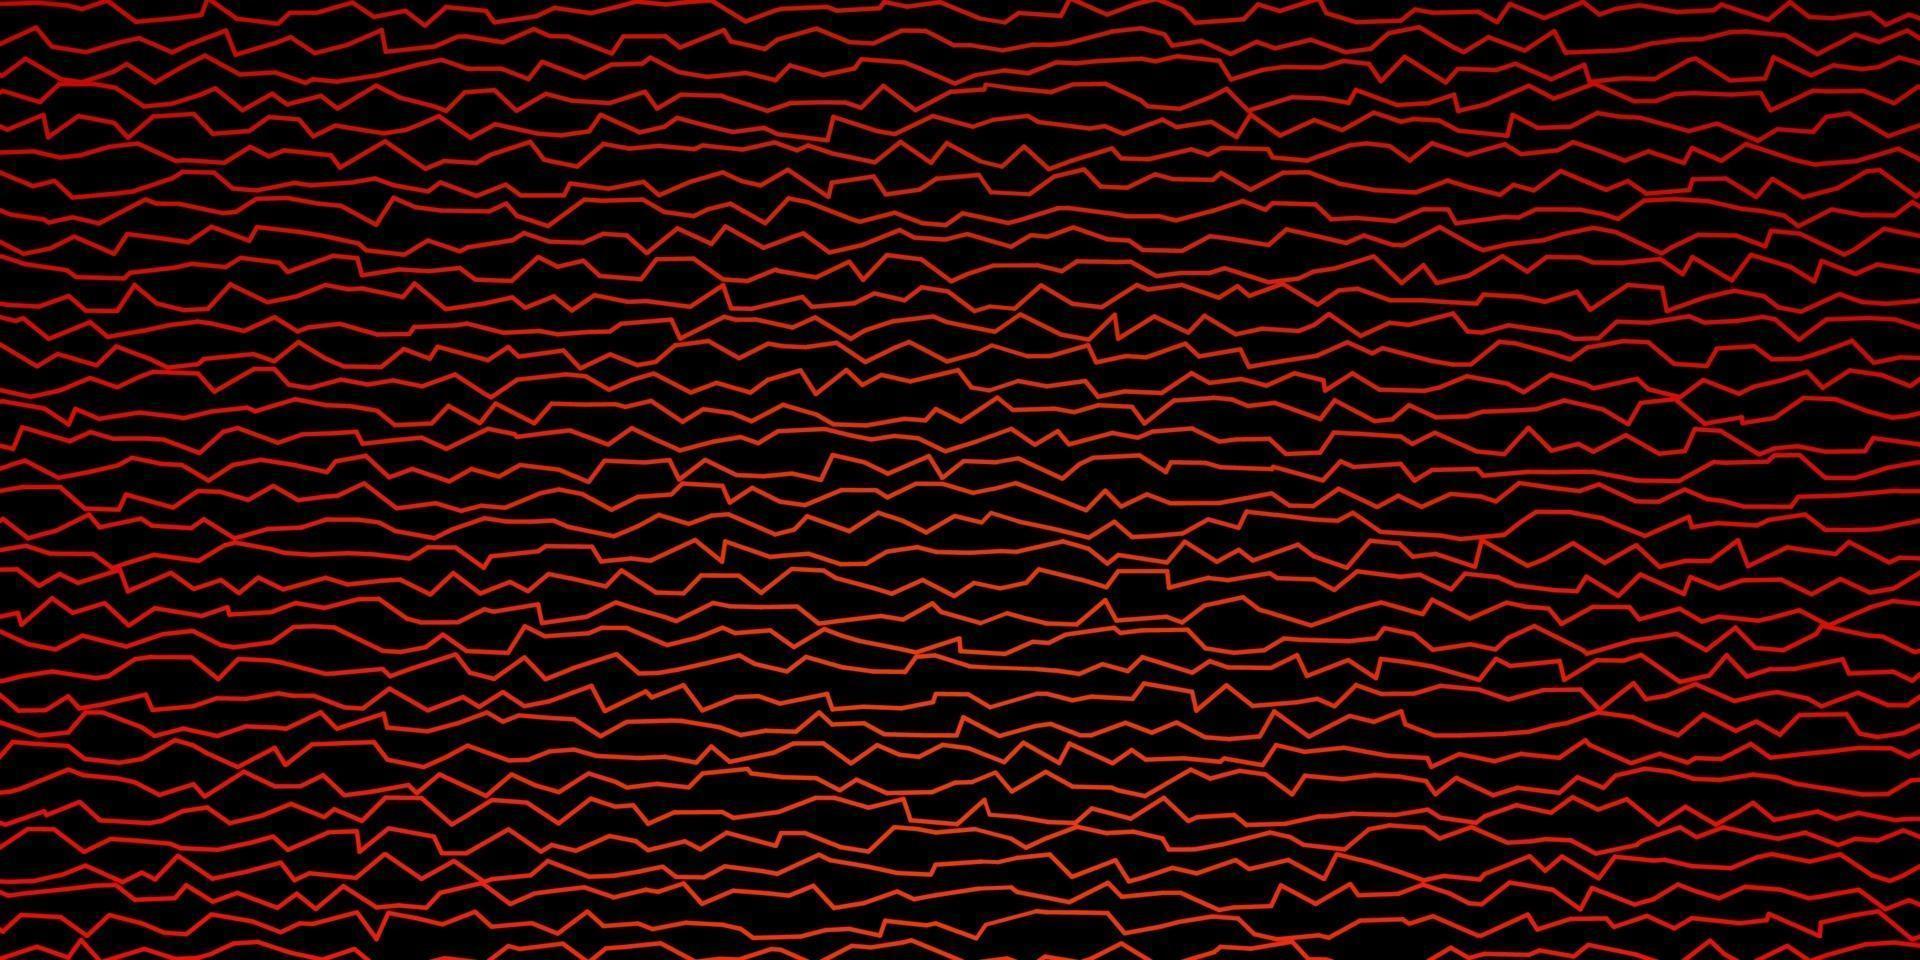 mörk orange vektor bakgrund med böjda linjer.